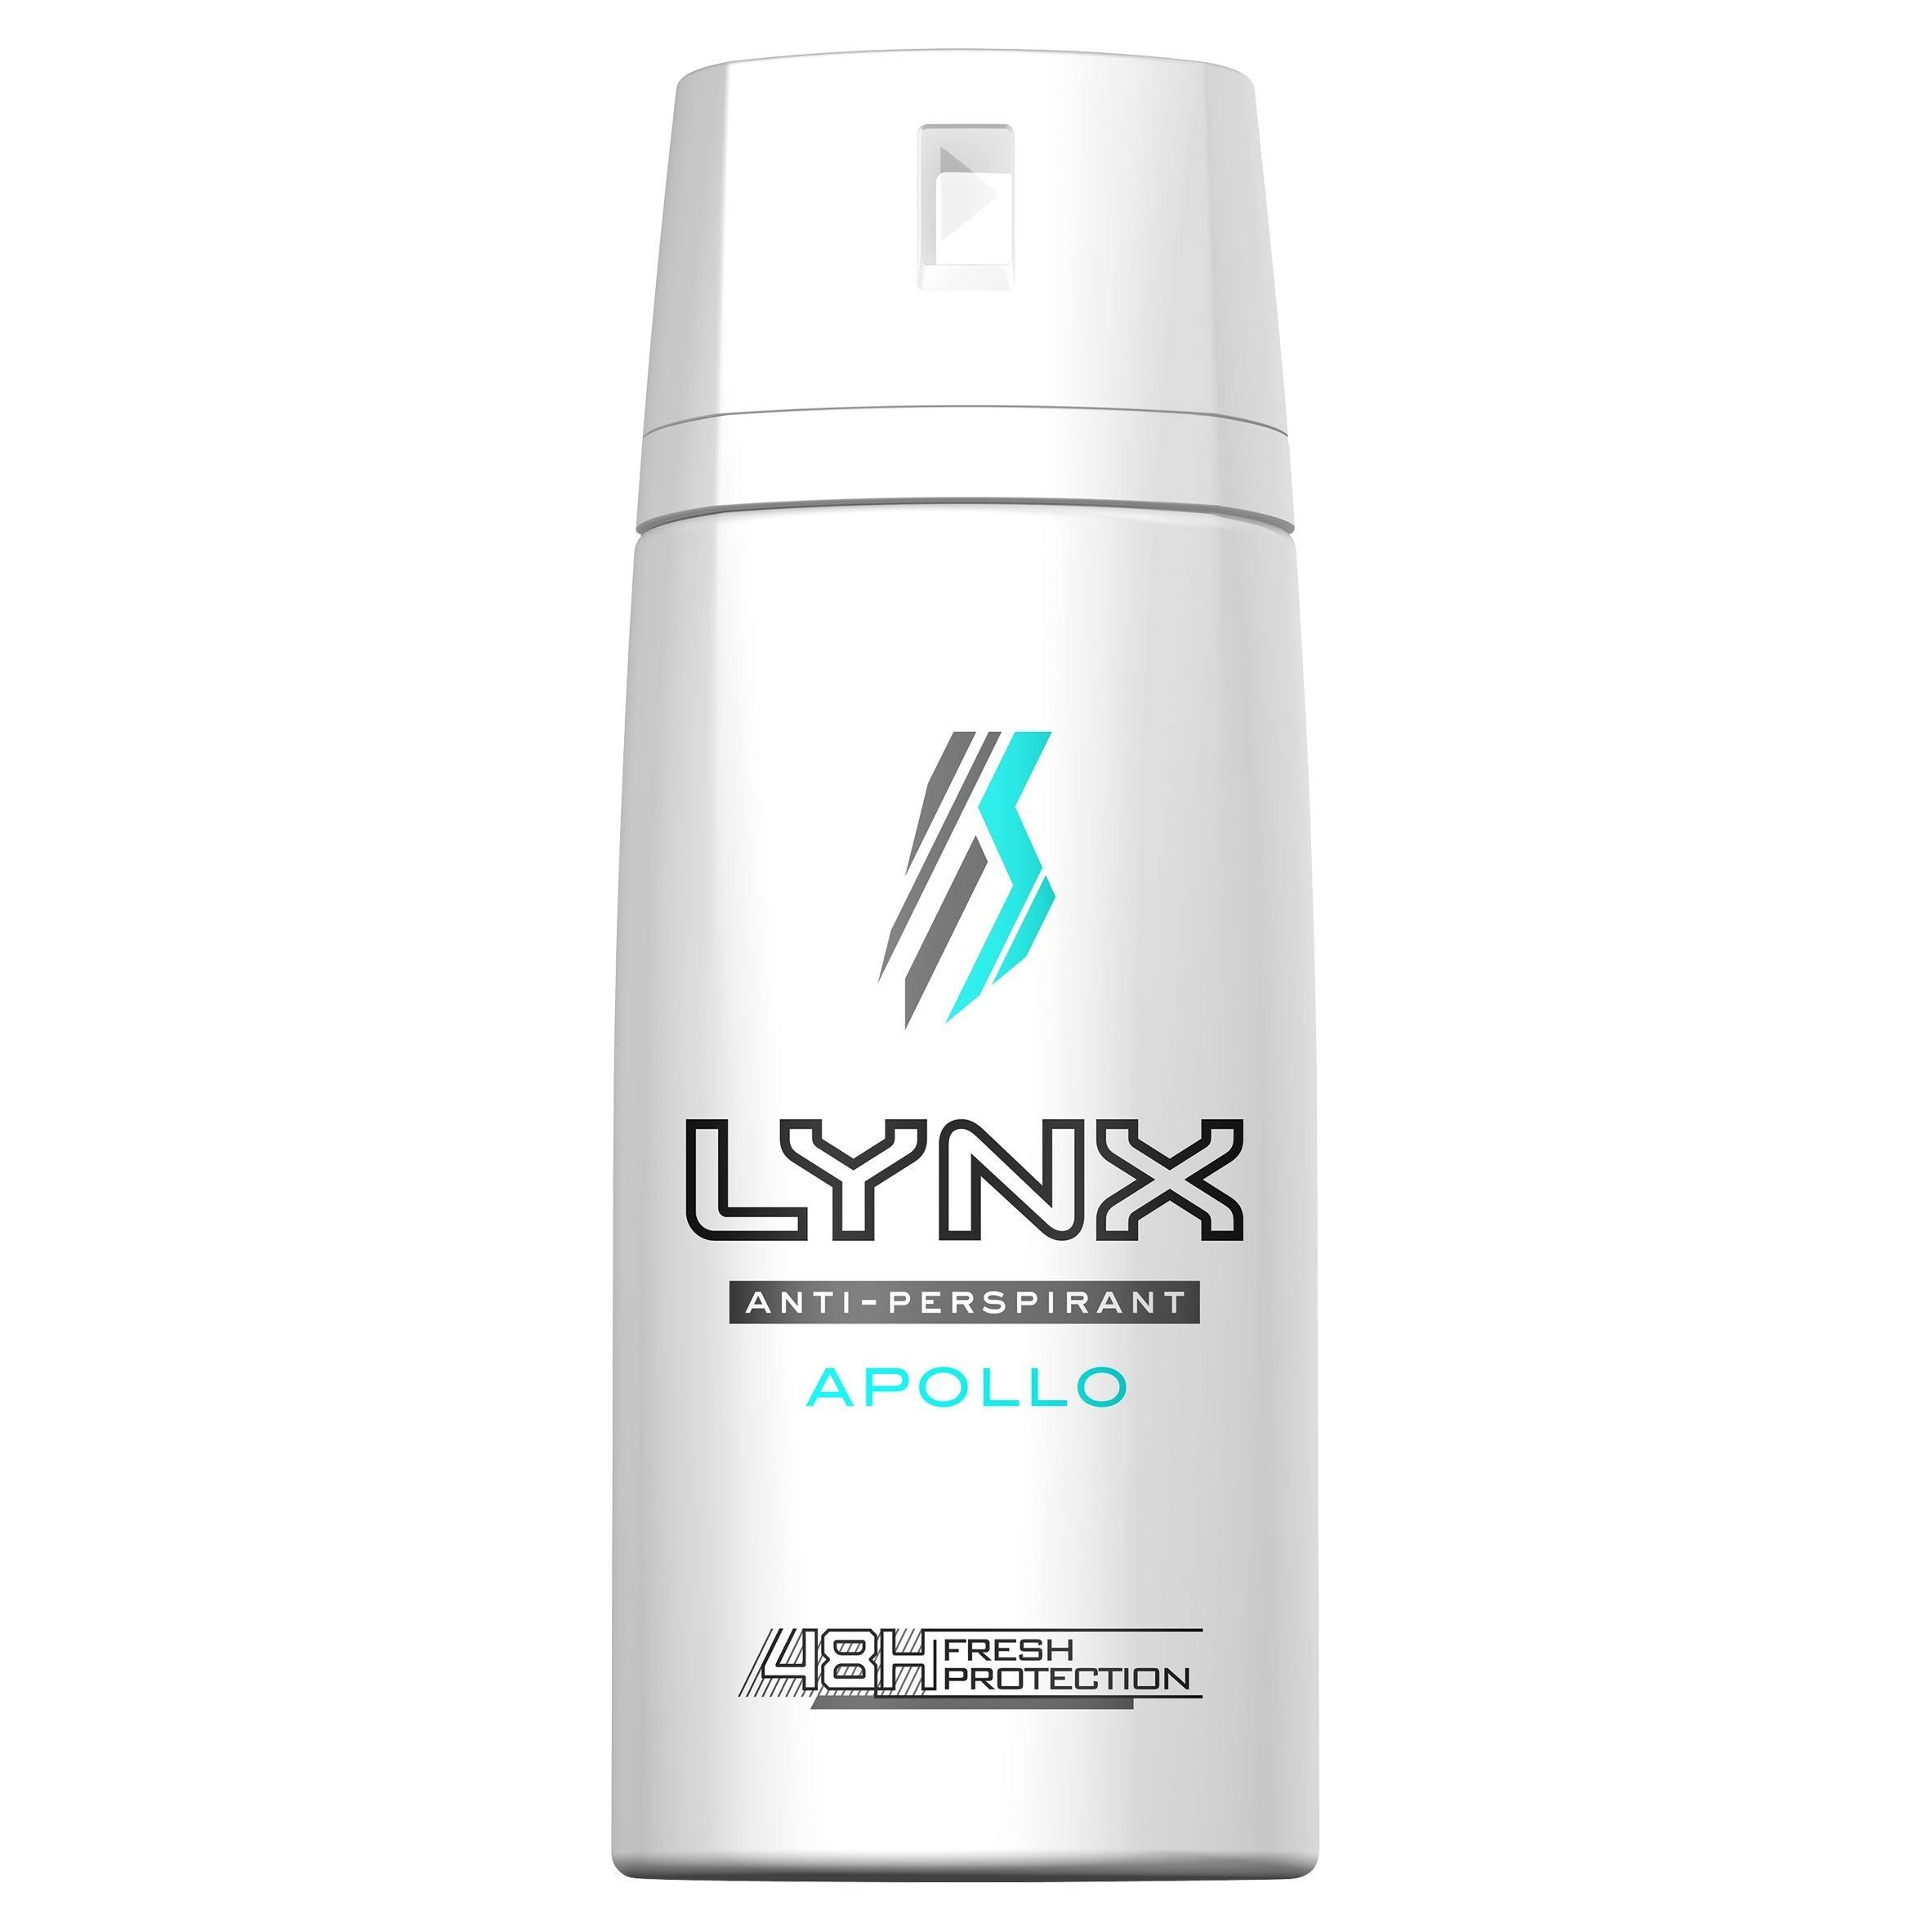 Lynx Anti-Perspirant Deodorant Spray - Apollo, 150ml